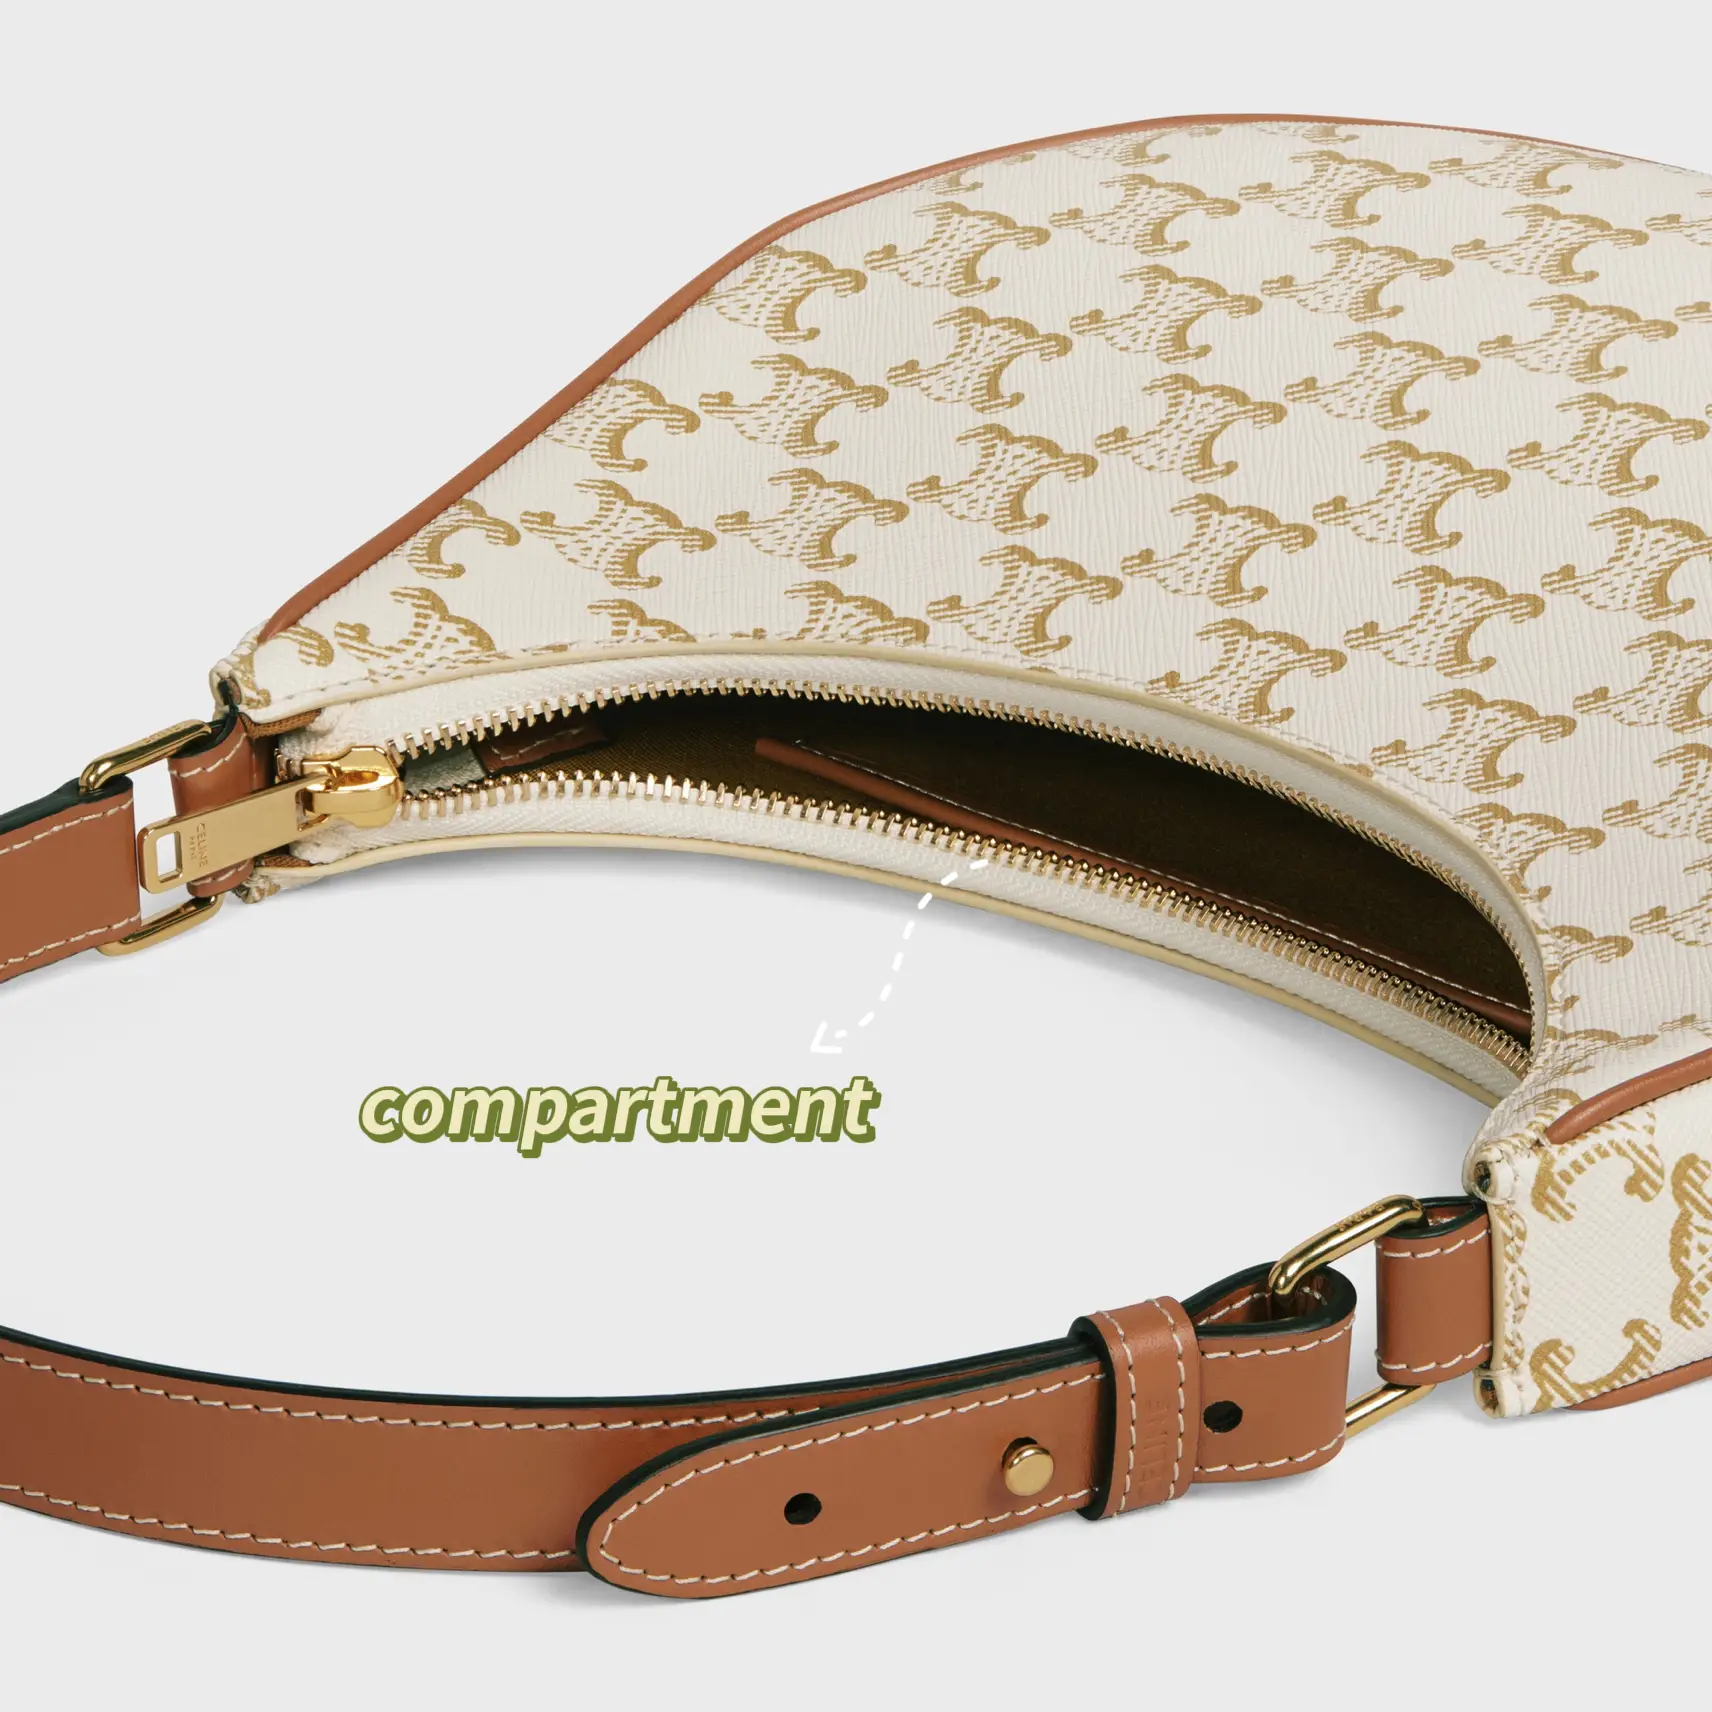 Best Styling Luxury Bag, Ava Celine 👛, Gallery posted by Natasha Lee